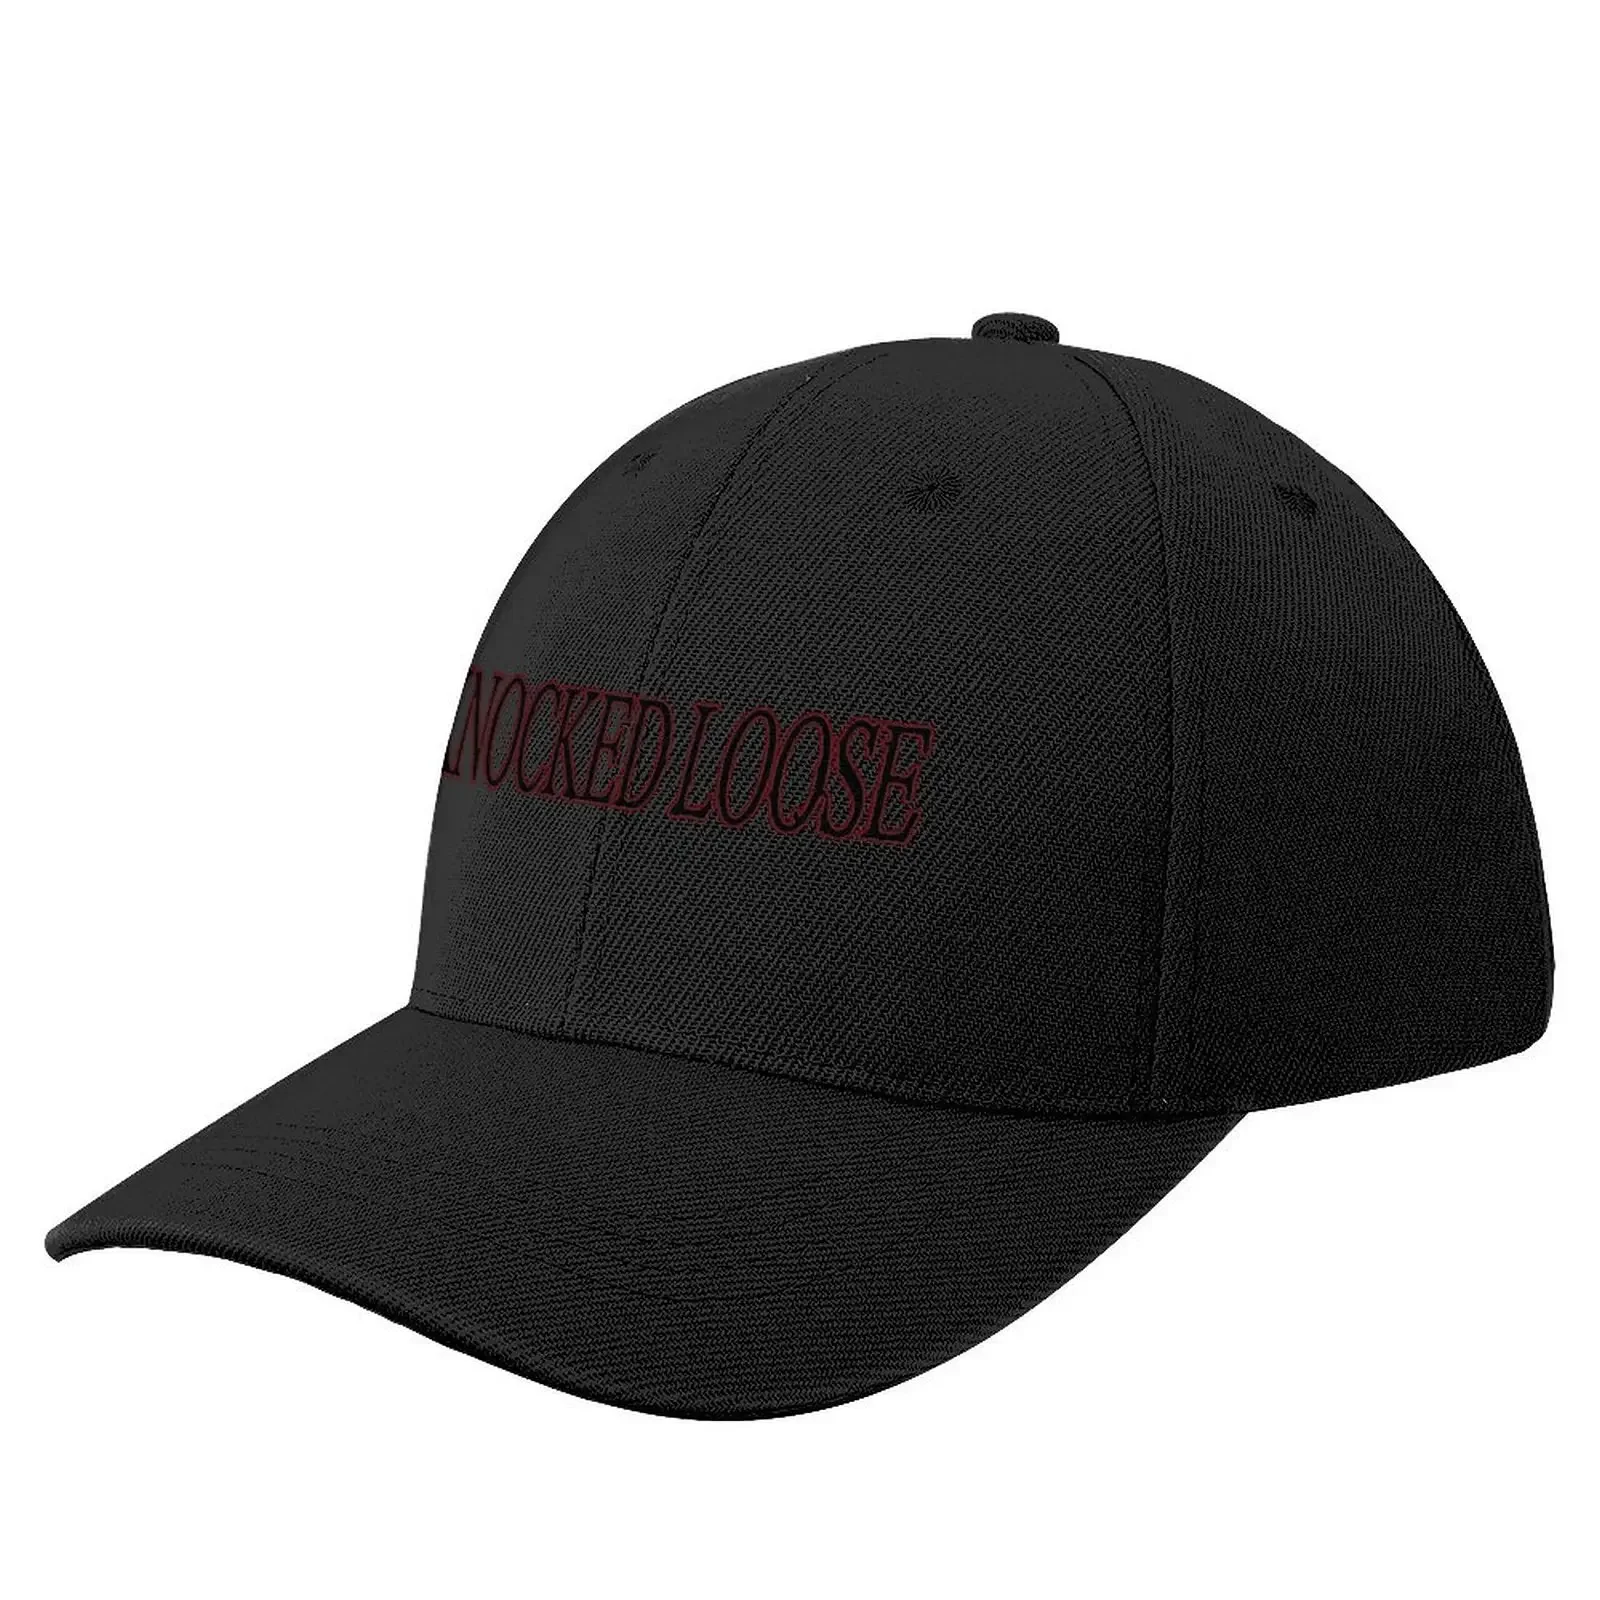 knocked loose logo Baseball Cap summer hat Hat Luxury Brand Snapback Cap Golf Cap Women's Hats Men's